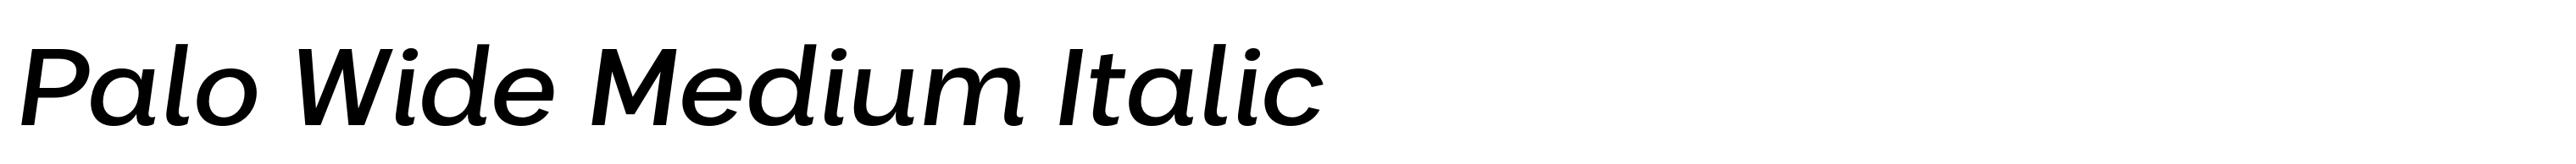 Palo Wide Medium Italic